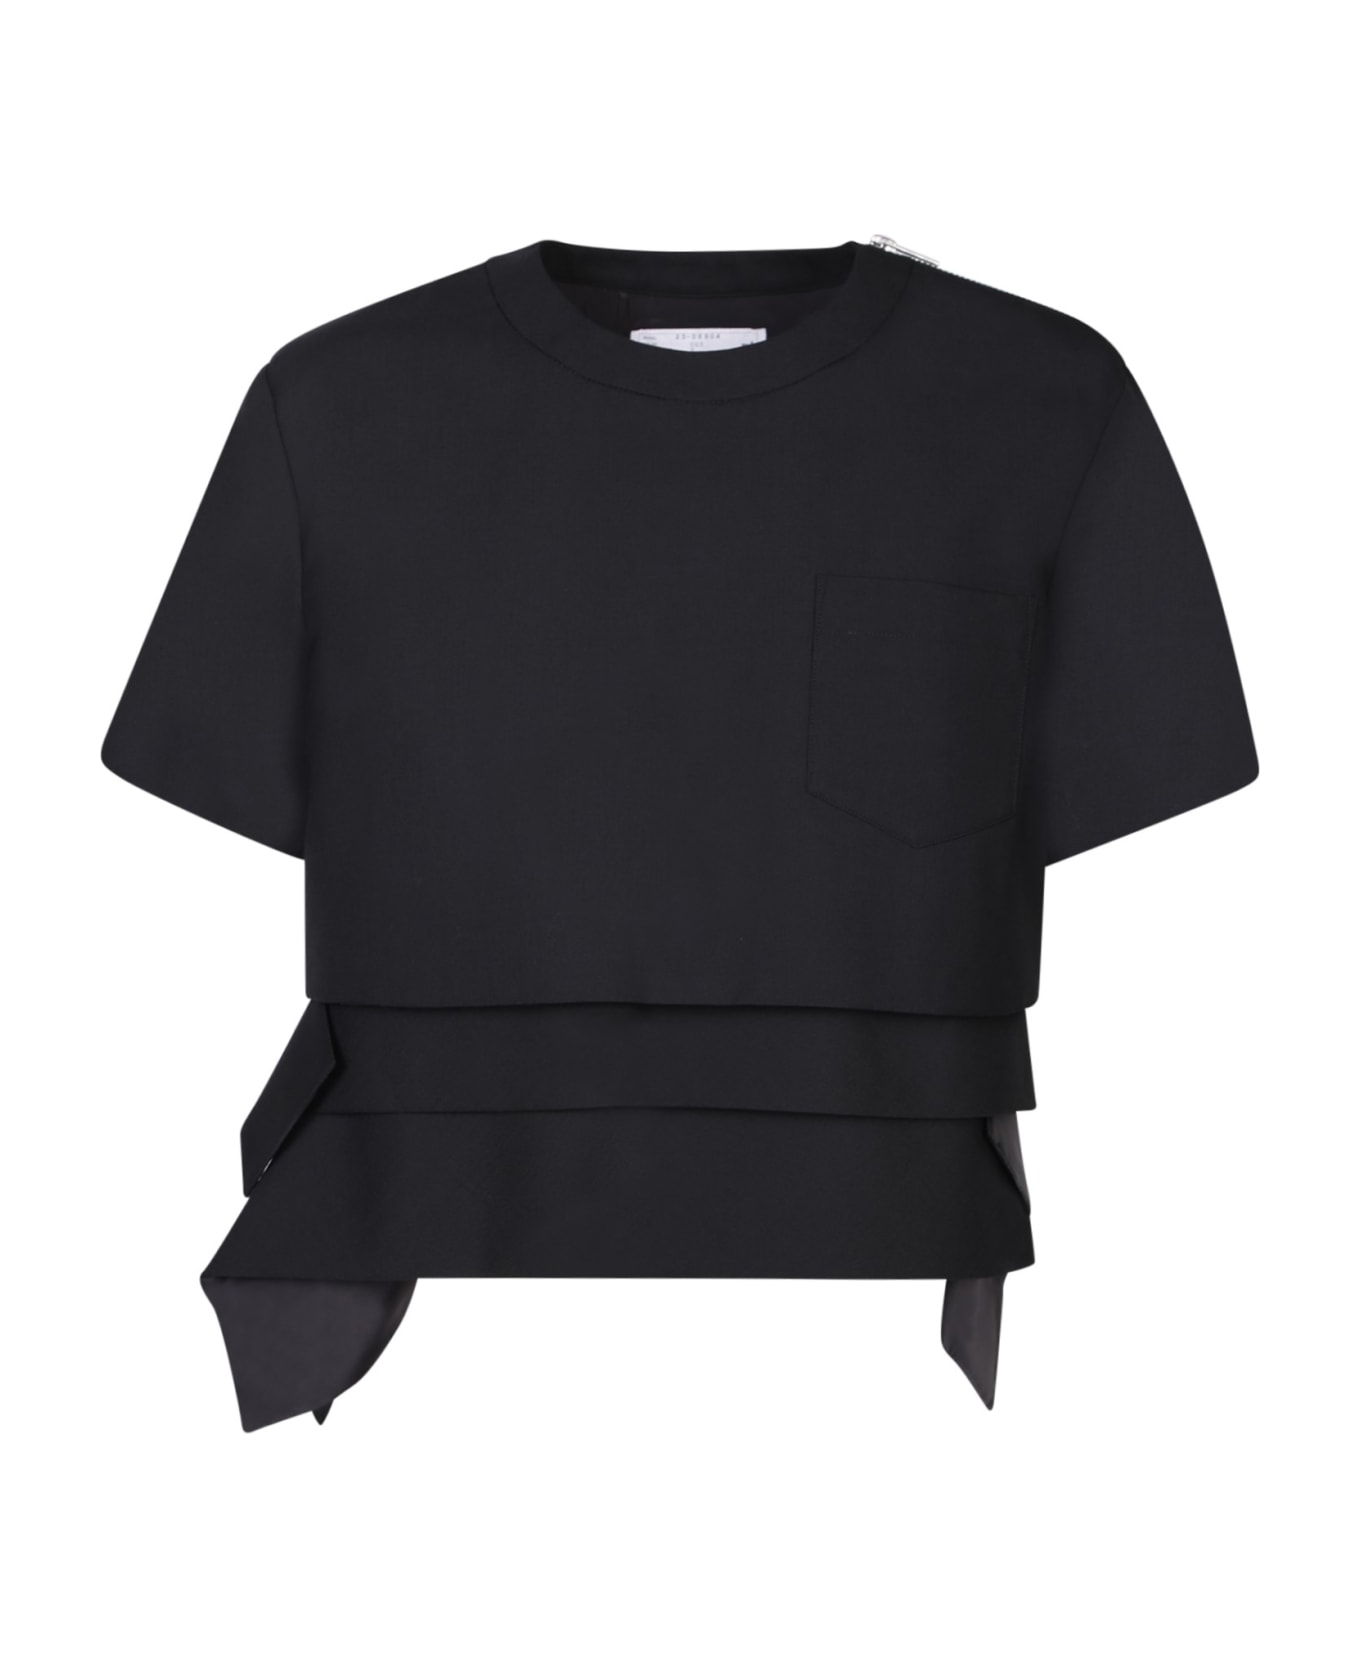 Sacai Suiting Black T-shirt - Black